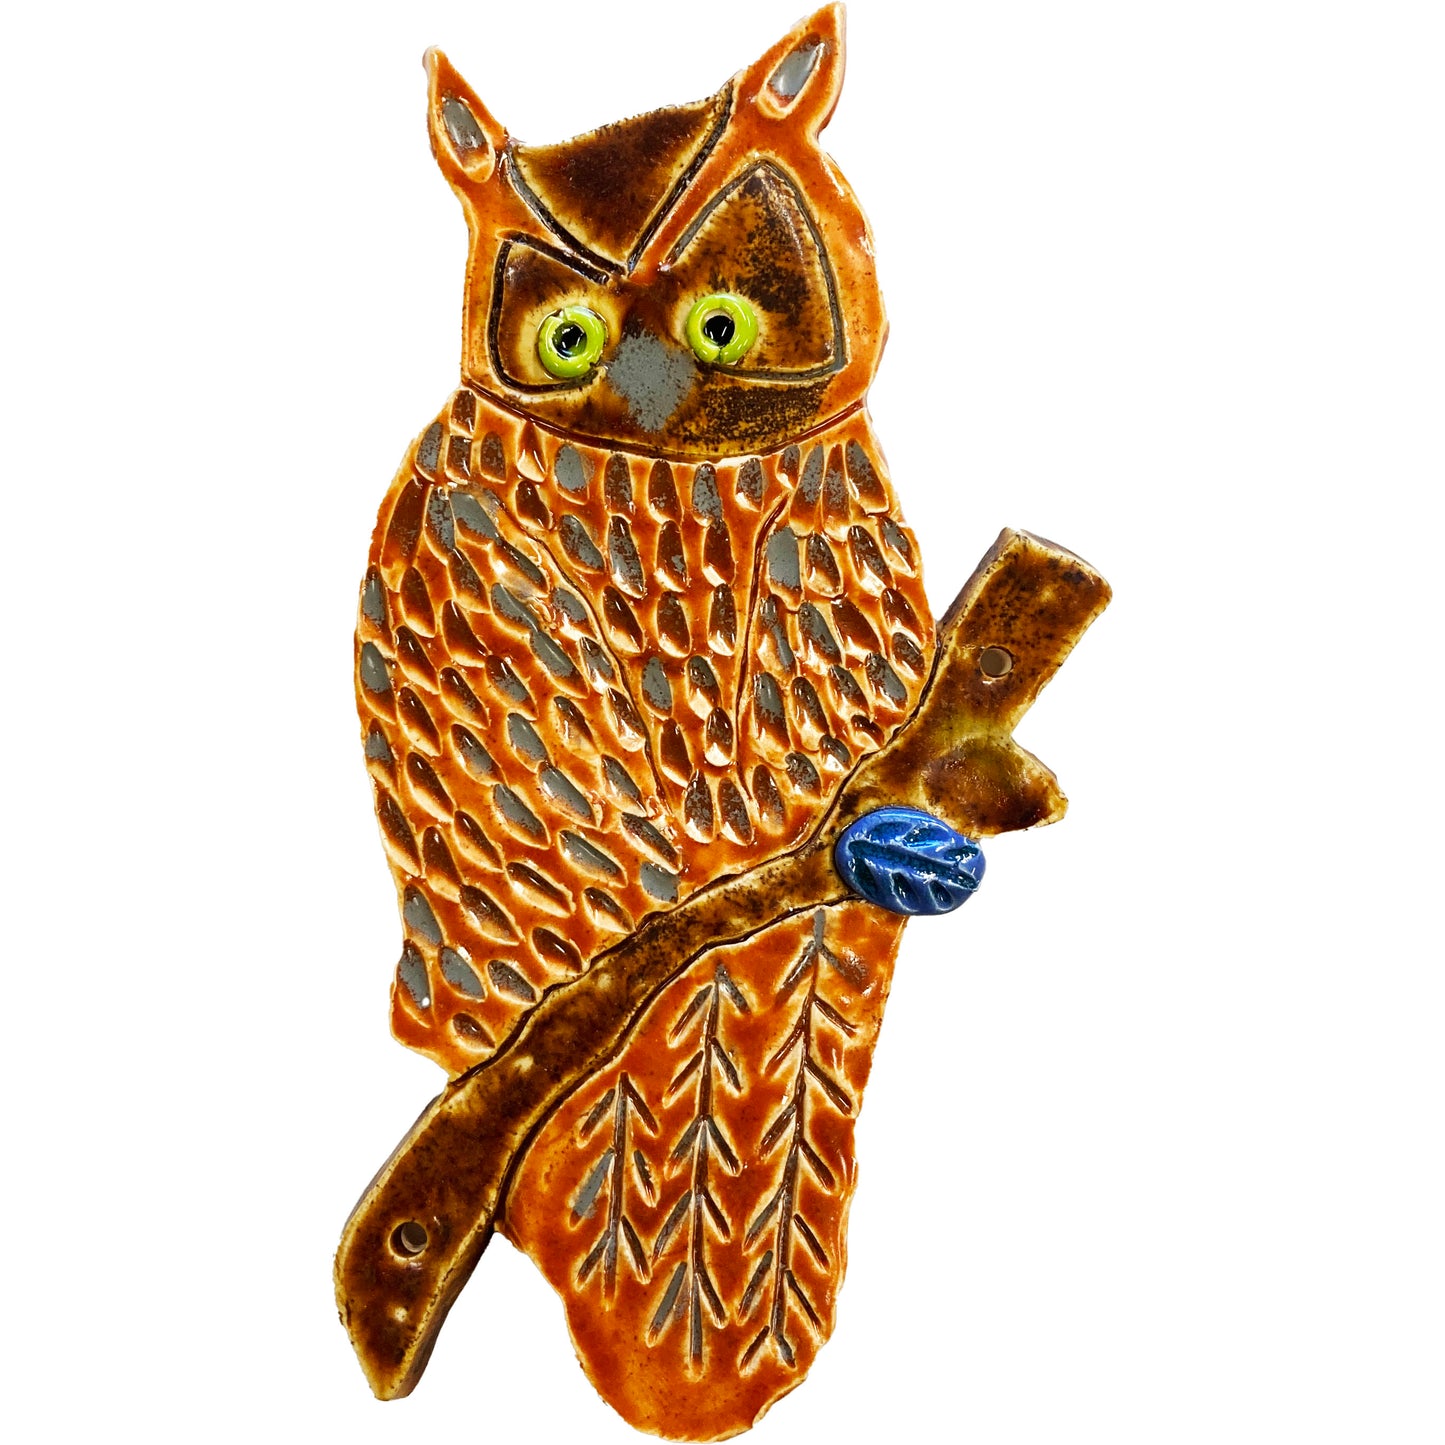 Ceramic Arts Handmade Clay Crafts 8-inch x 5-inch Glazed Owl made by Lisa Uptain